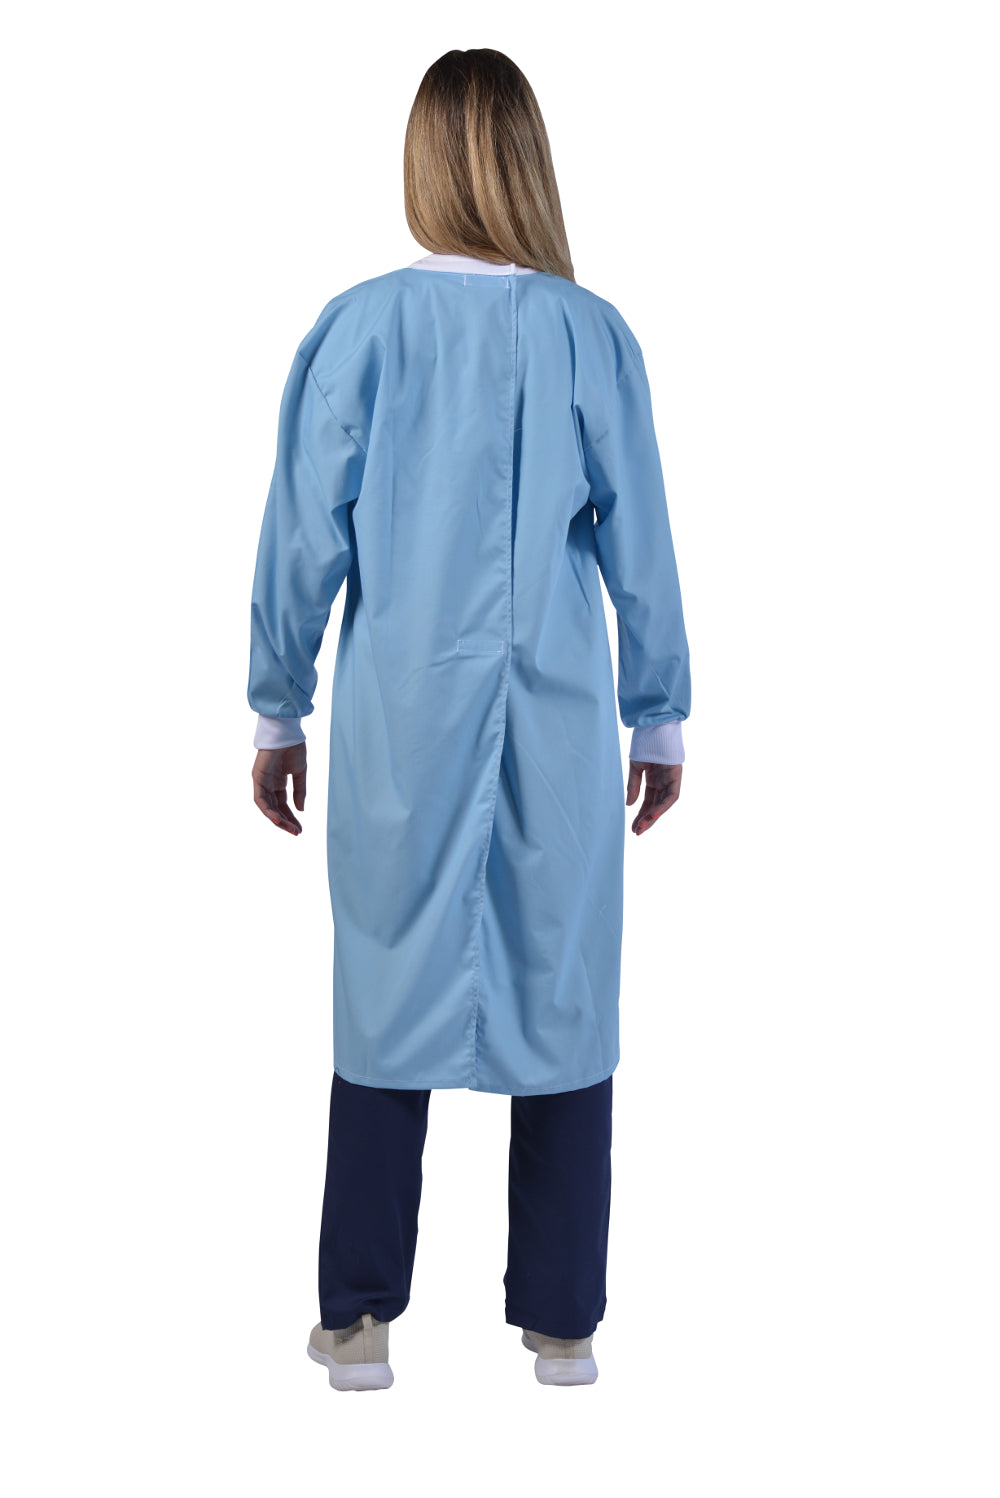 Blue - Avida Core Long Sleeve Gown